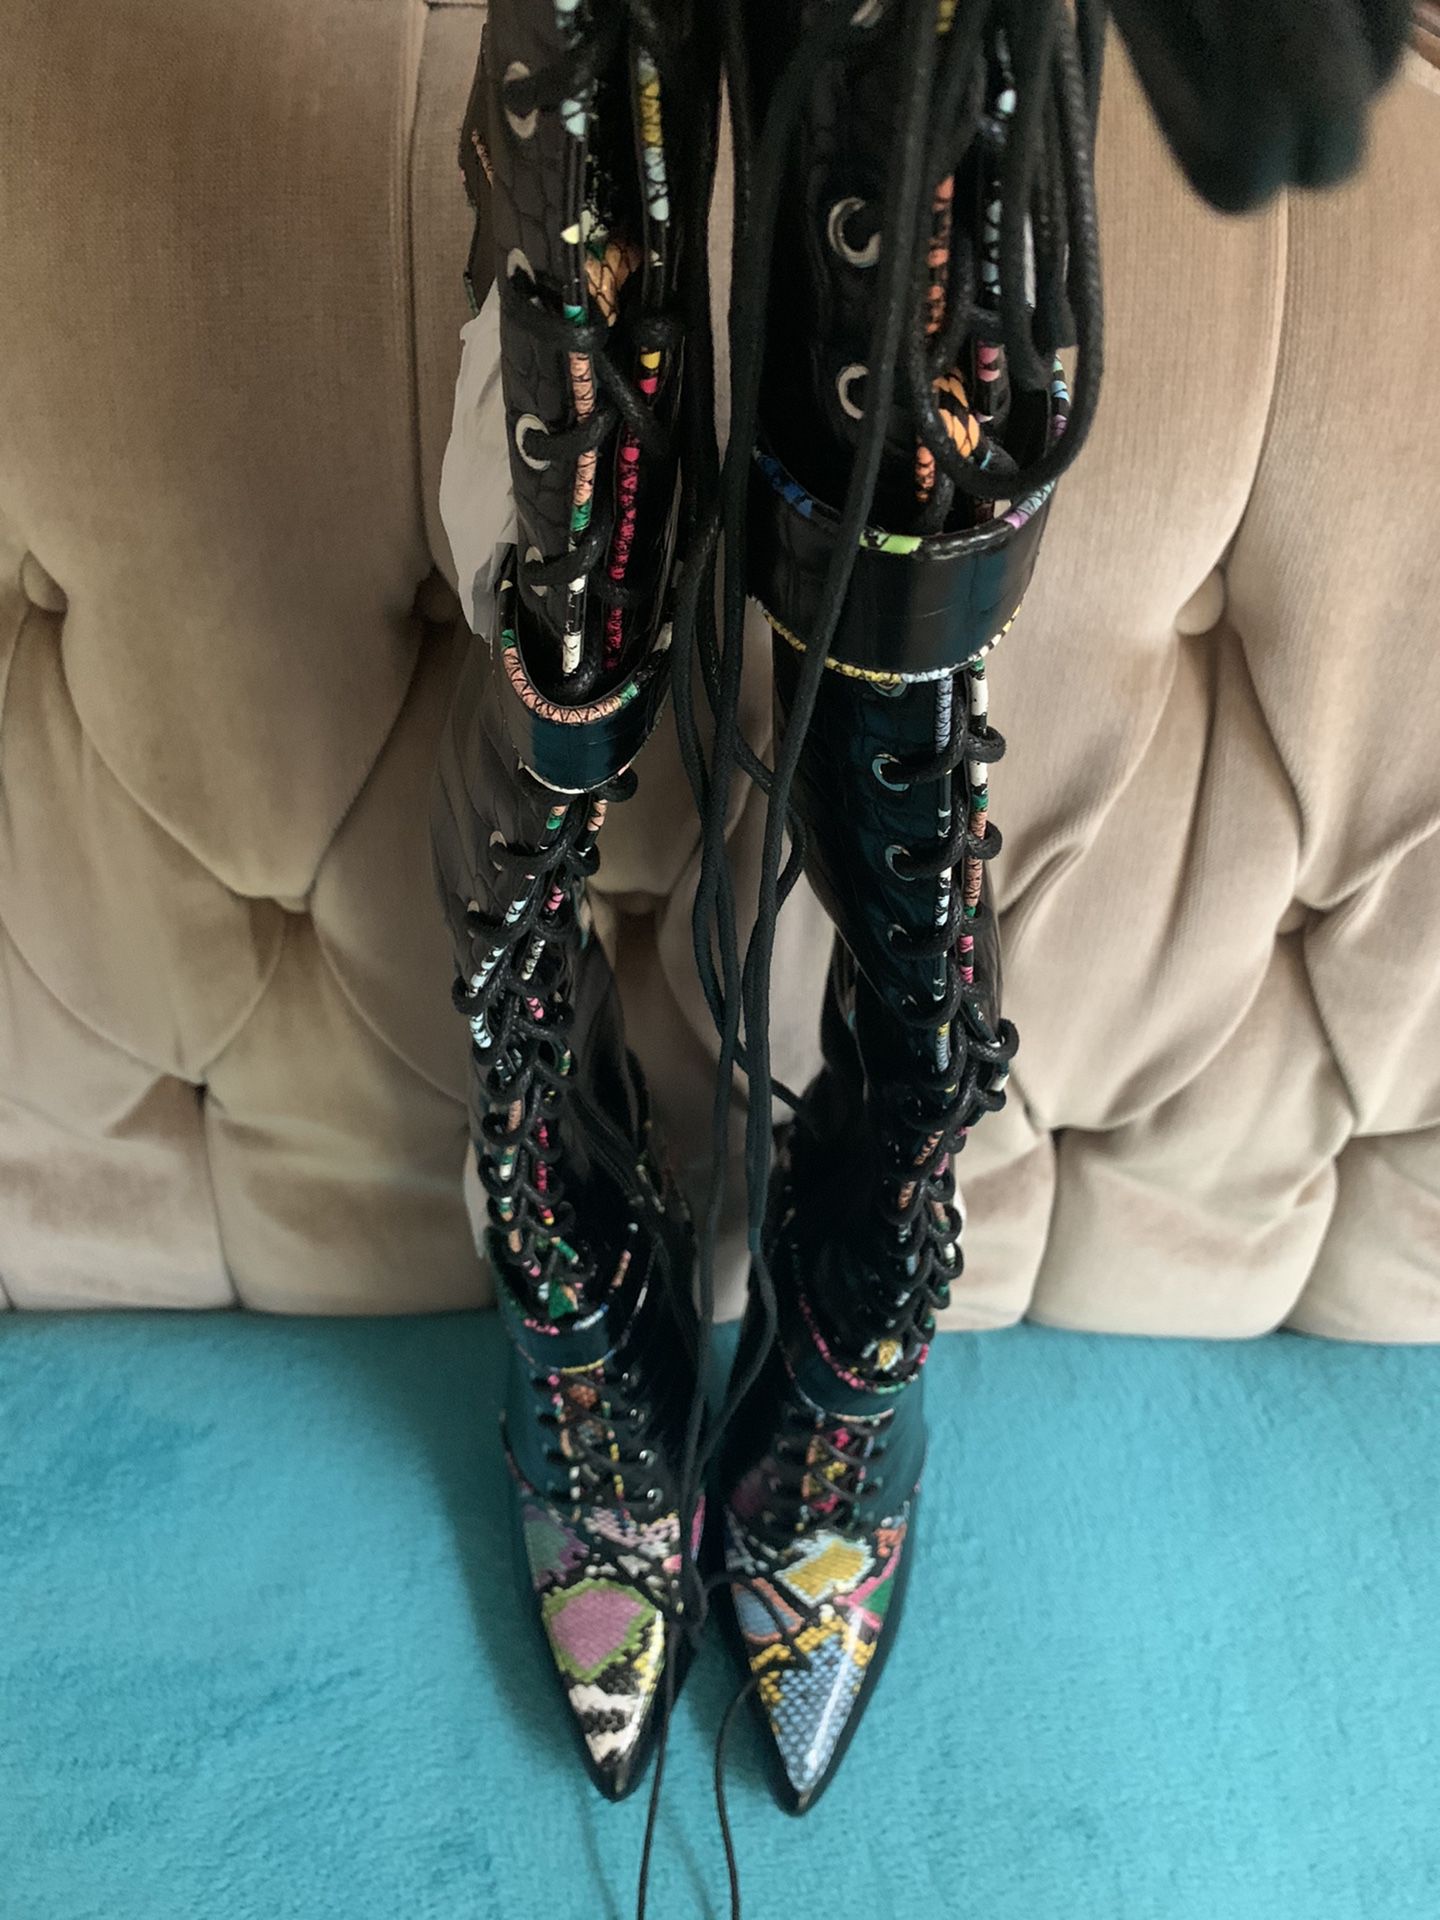 Women’s Brand New Azalea Wang Boots - Size 8